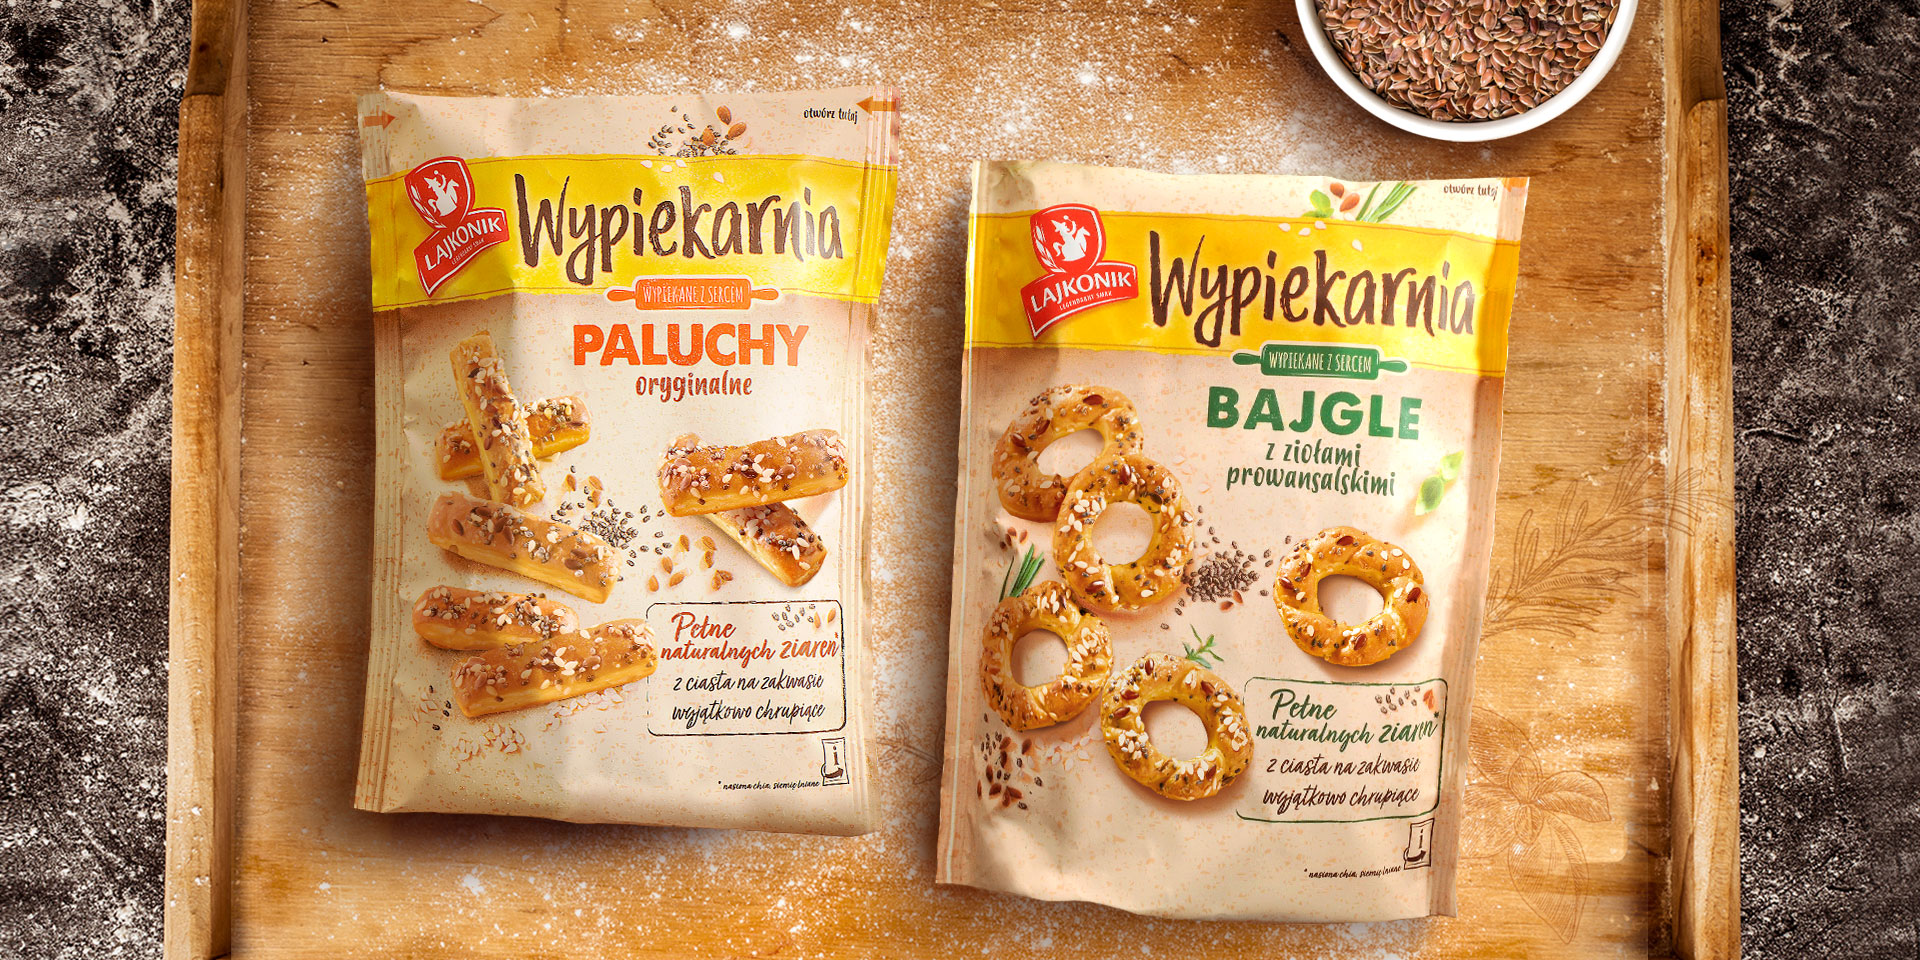 Salty snacks packaging design for Lajkonik Wypiekarnia - breadsticks and bagels.